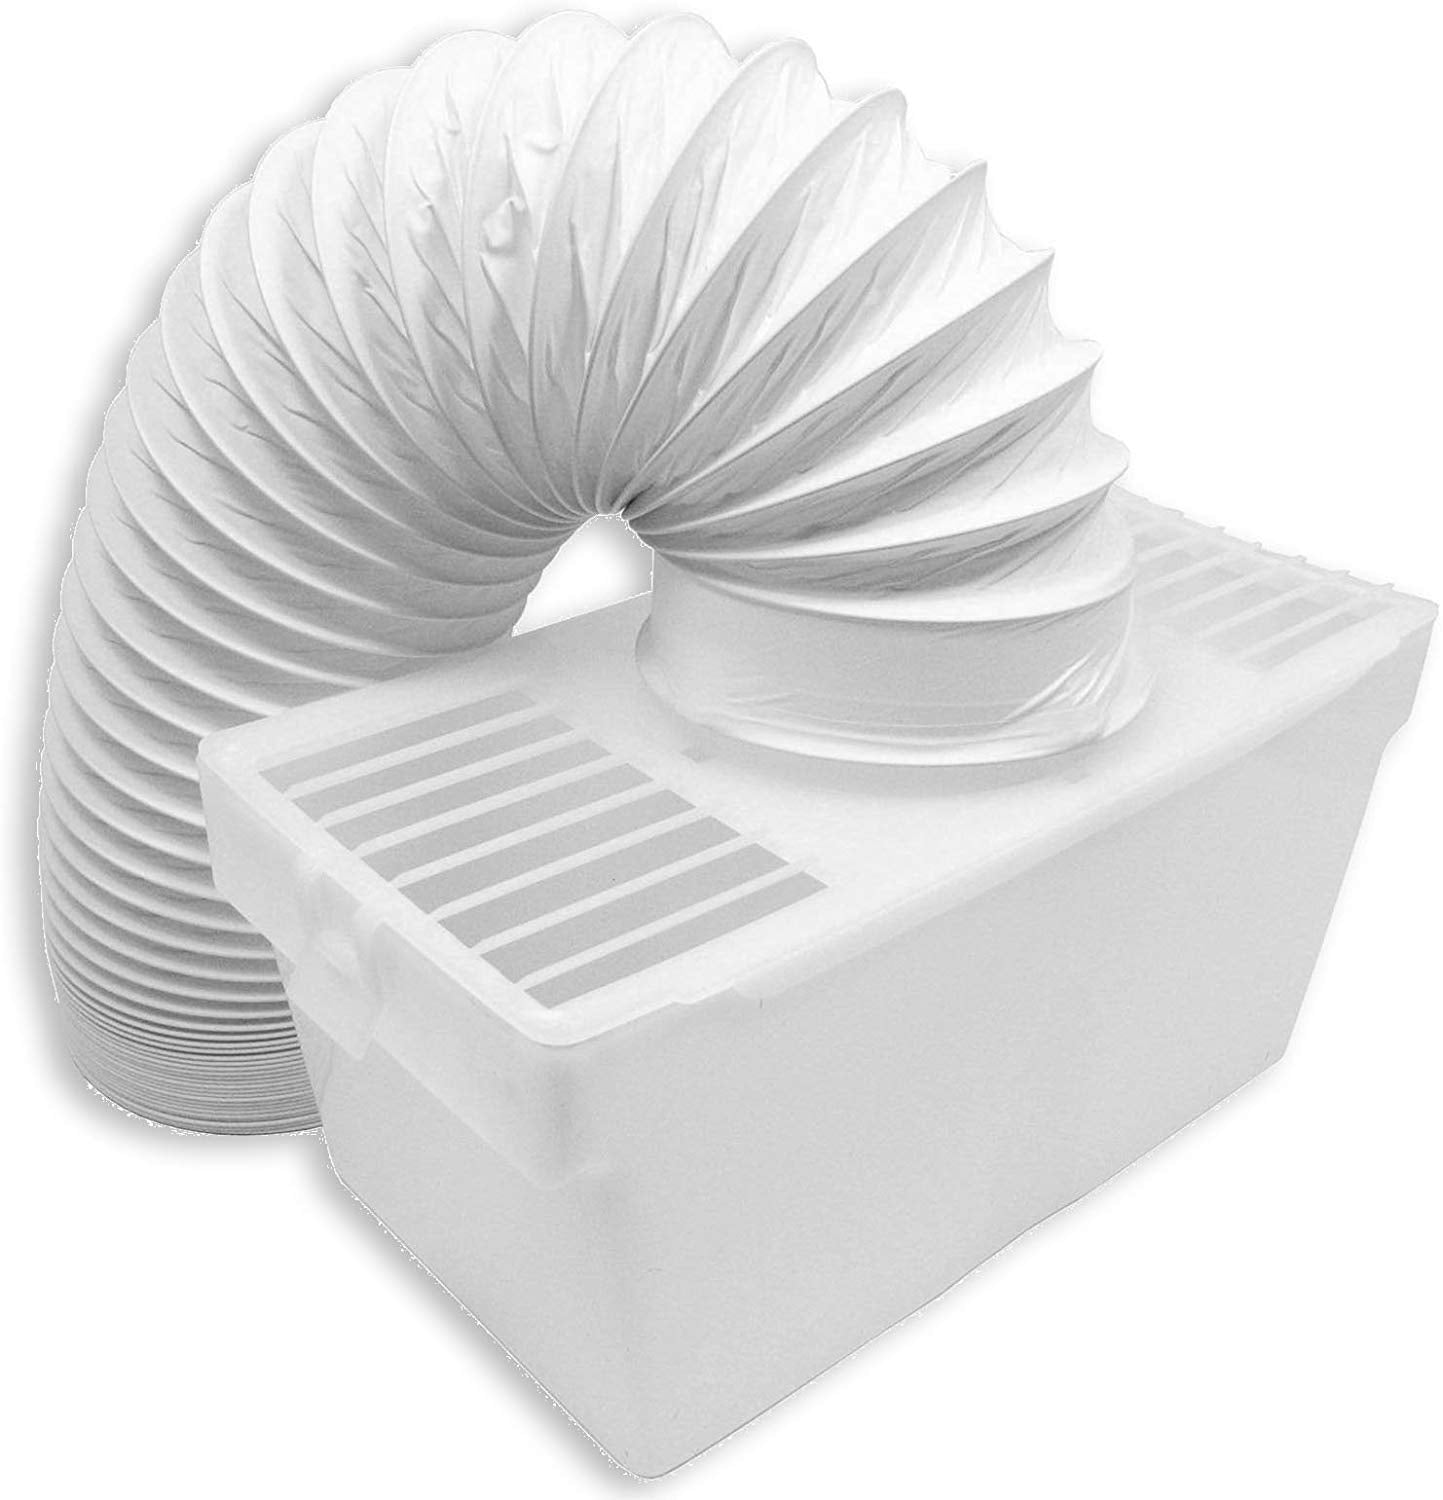 Condenser Vent Box & Hose Kit for Zanussi Vented Tumble Dryers (1.5m / 4" Diameter)